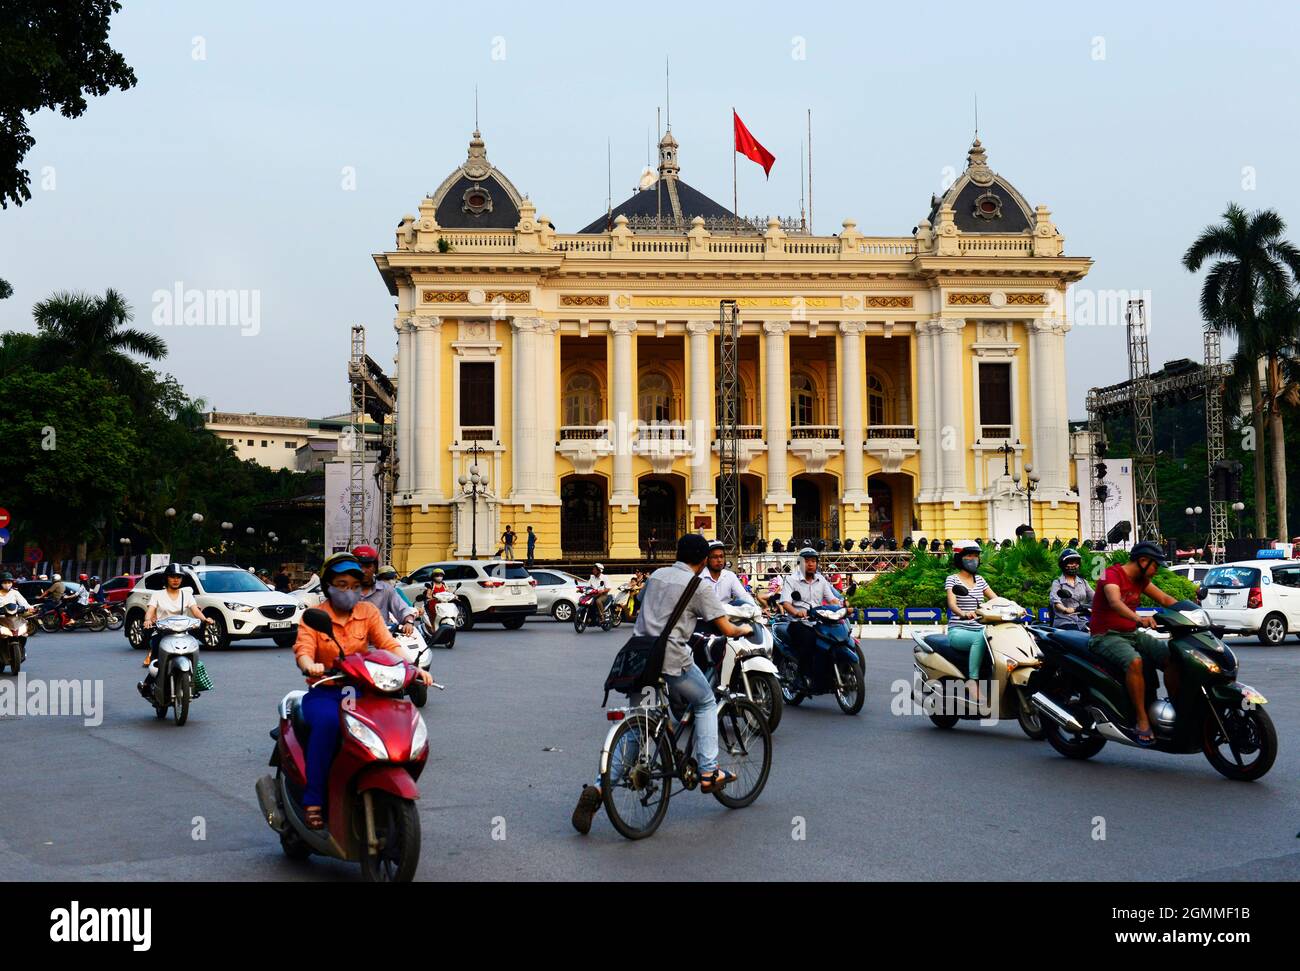 The Opera house building in Hanoi, Vietnam. Stock Photo